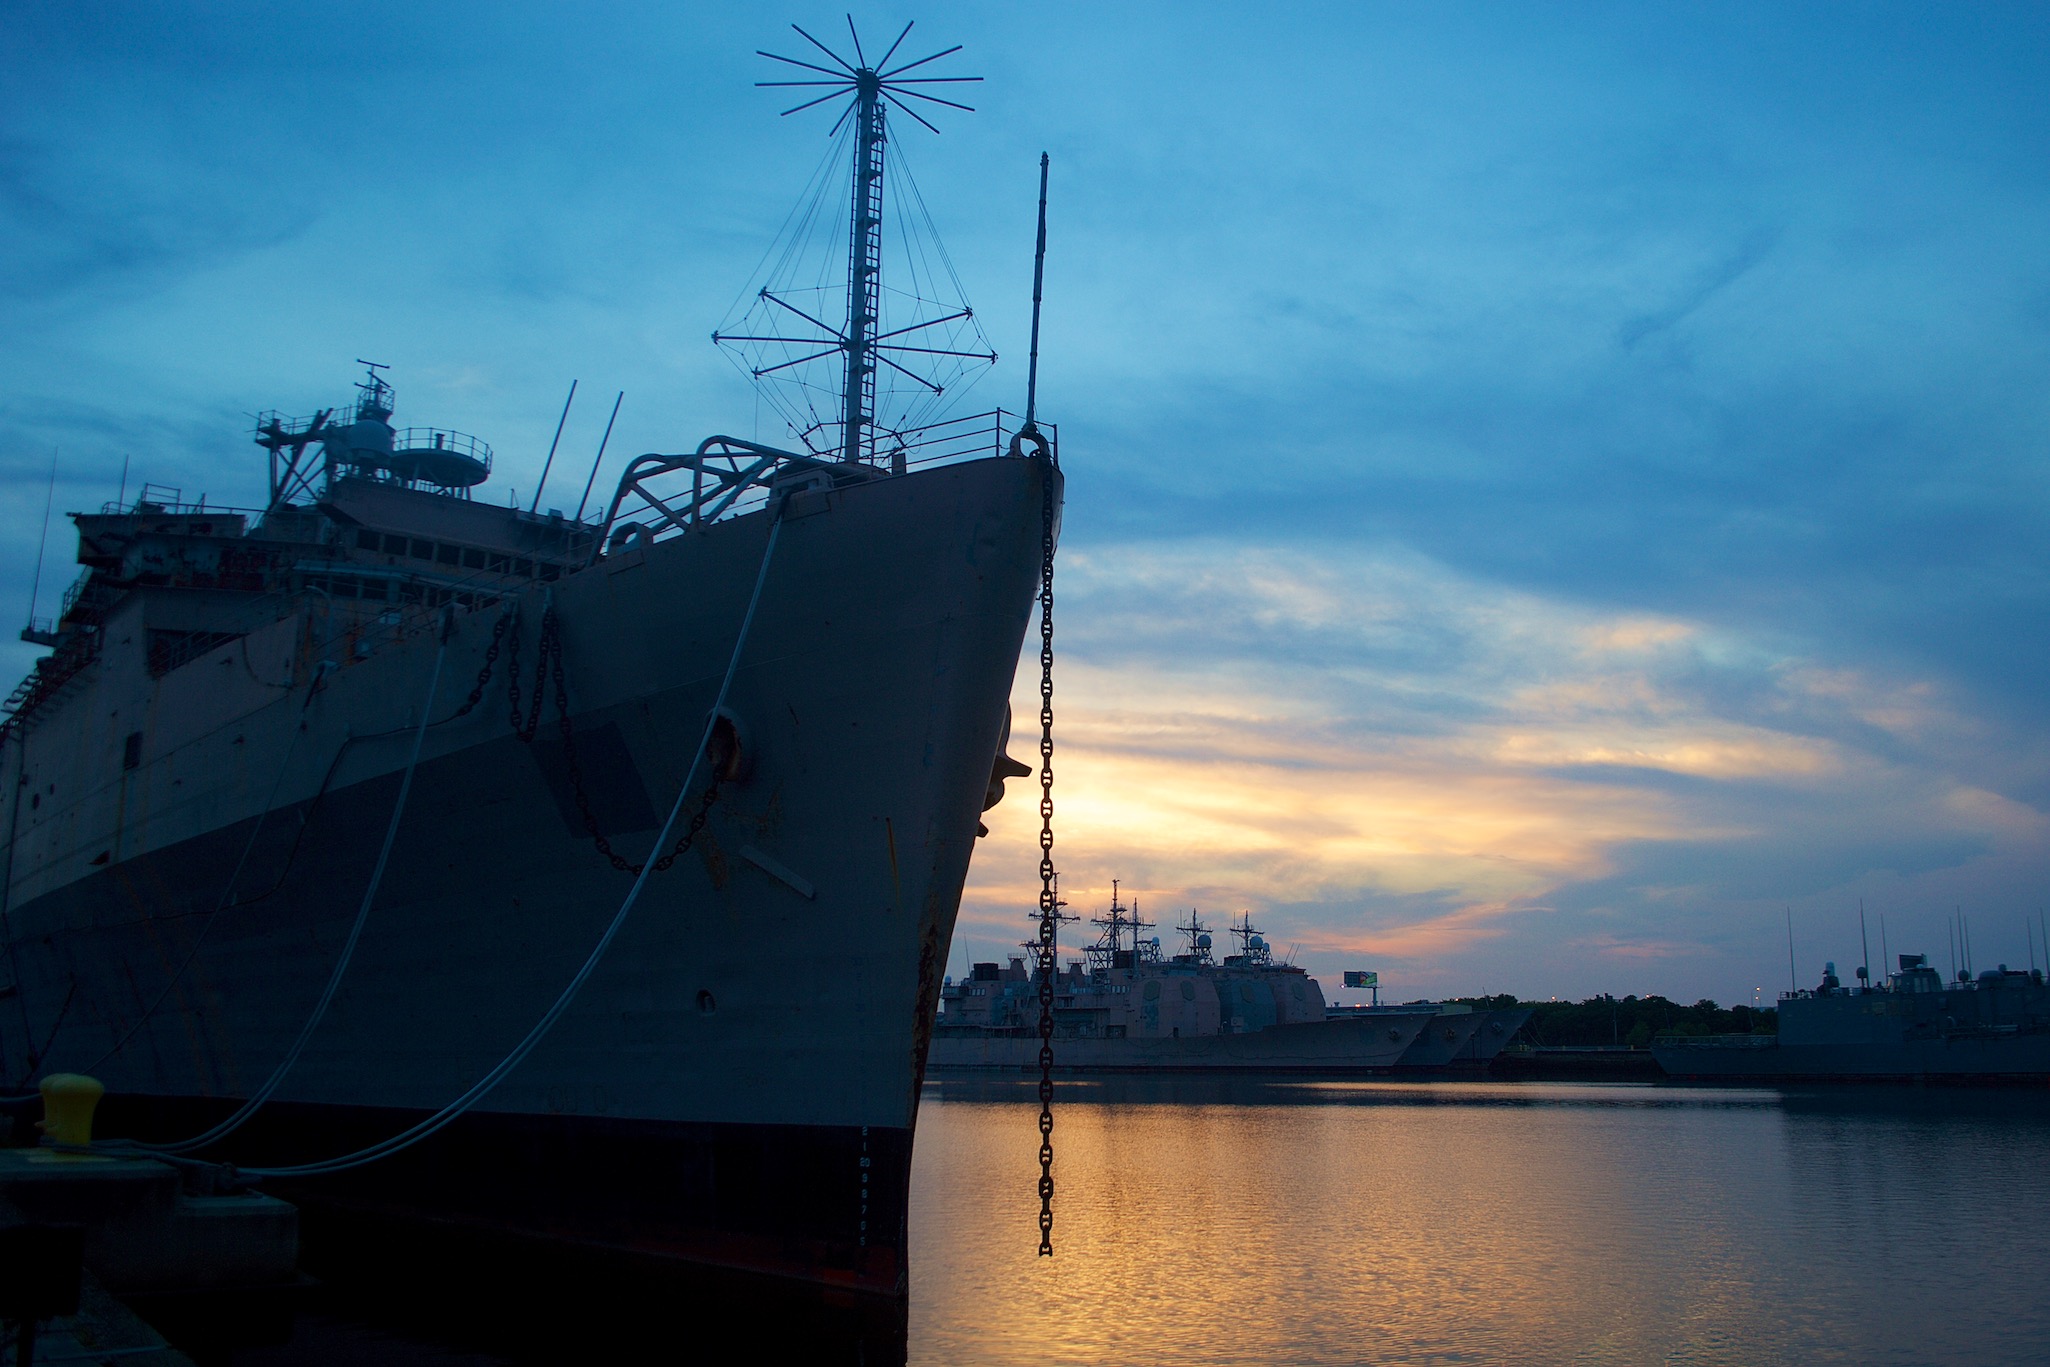 Sunset over the Naval Yard in Philadelphia, Pennslvania